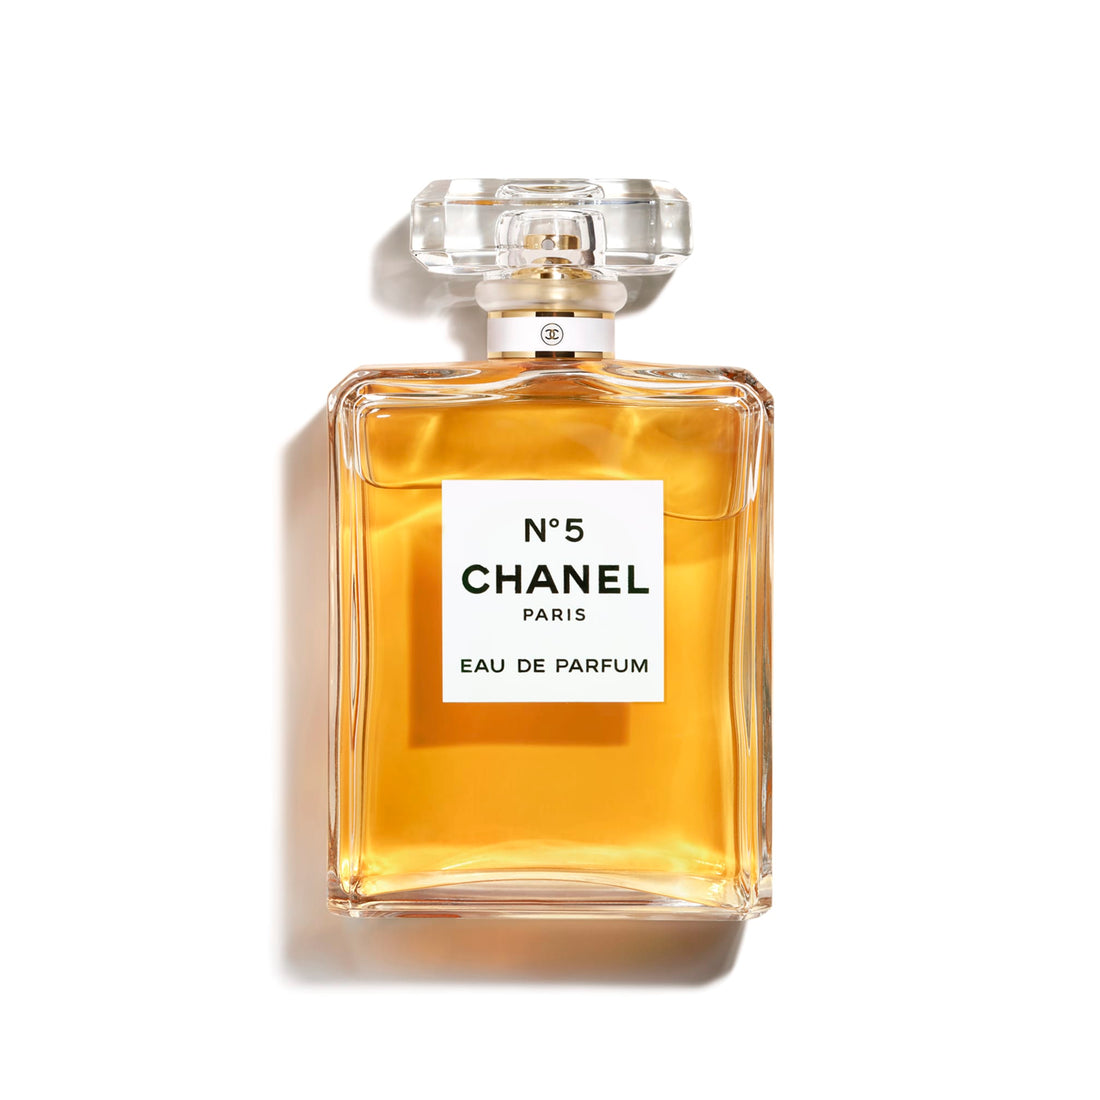 Chanel Eau de Parfum N ° 5, the timeless feminine fragrance